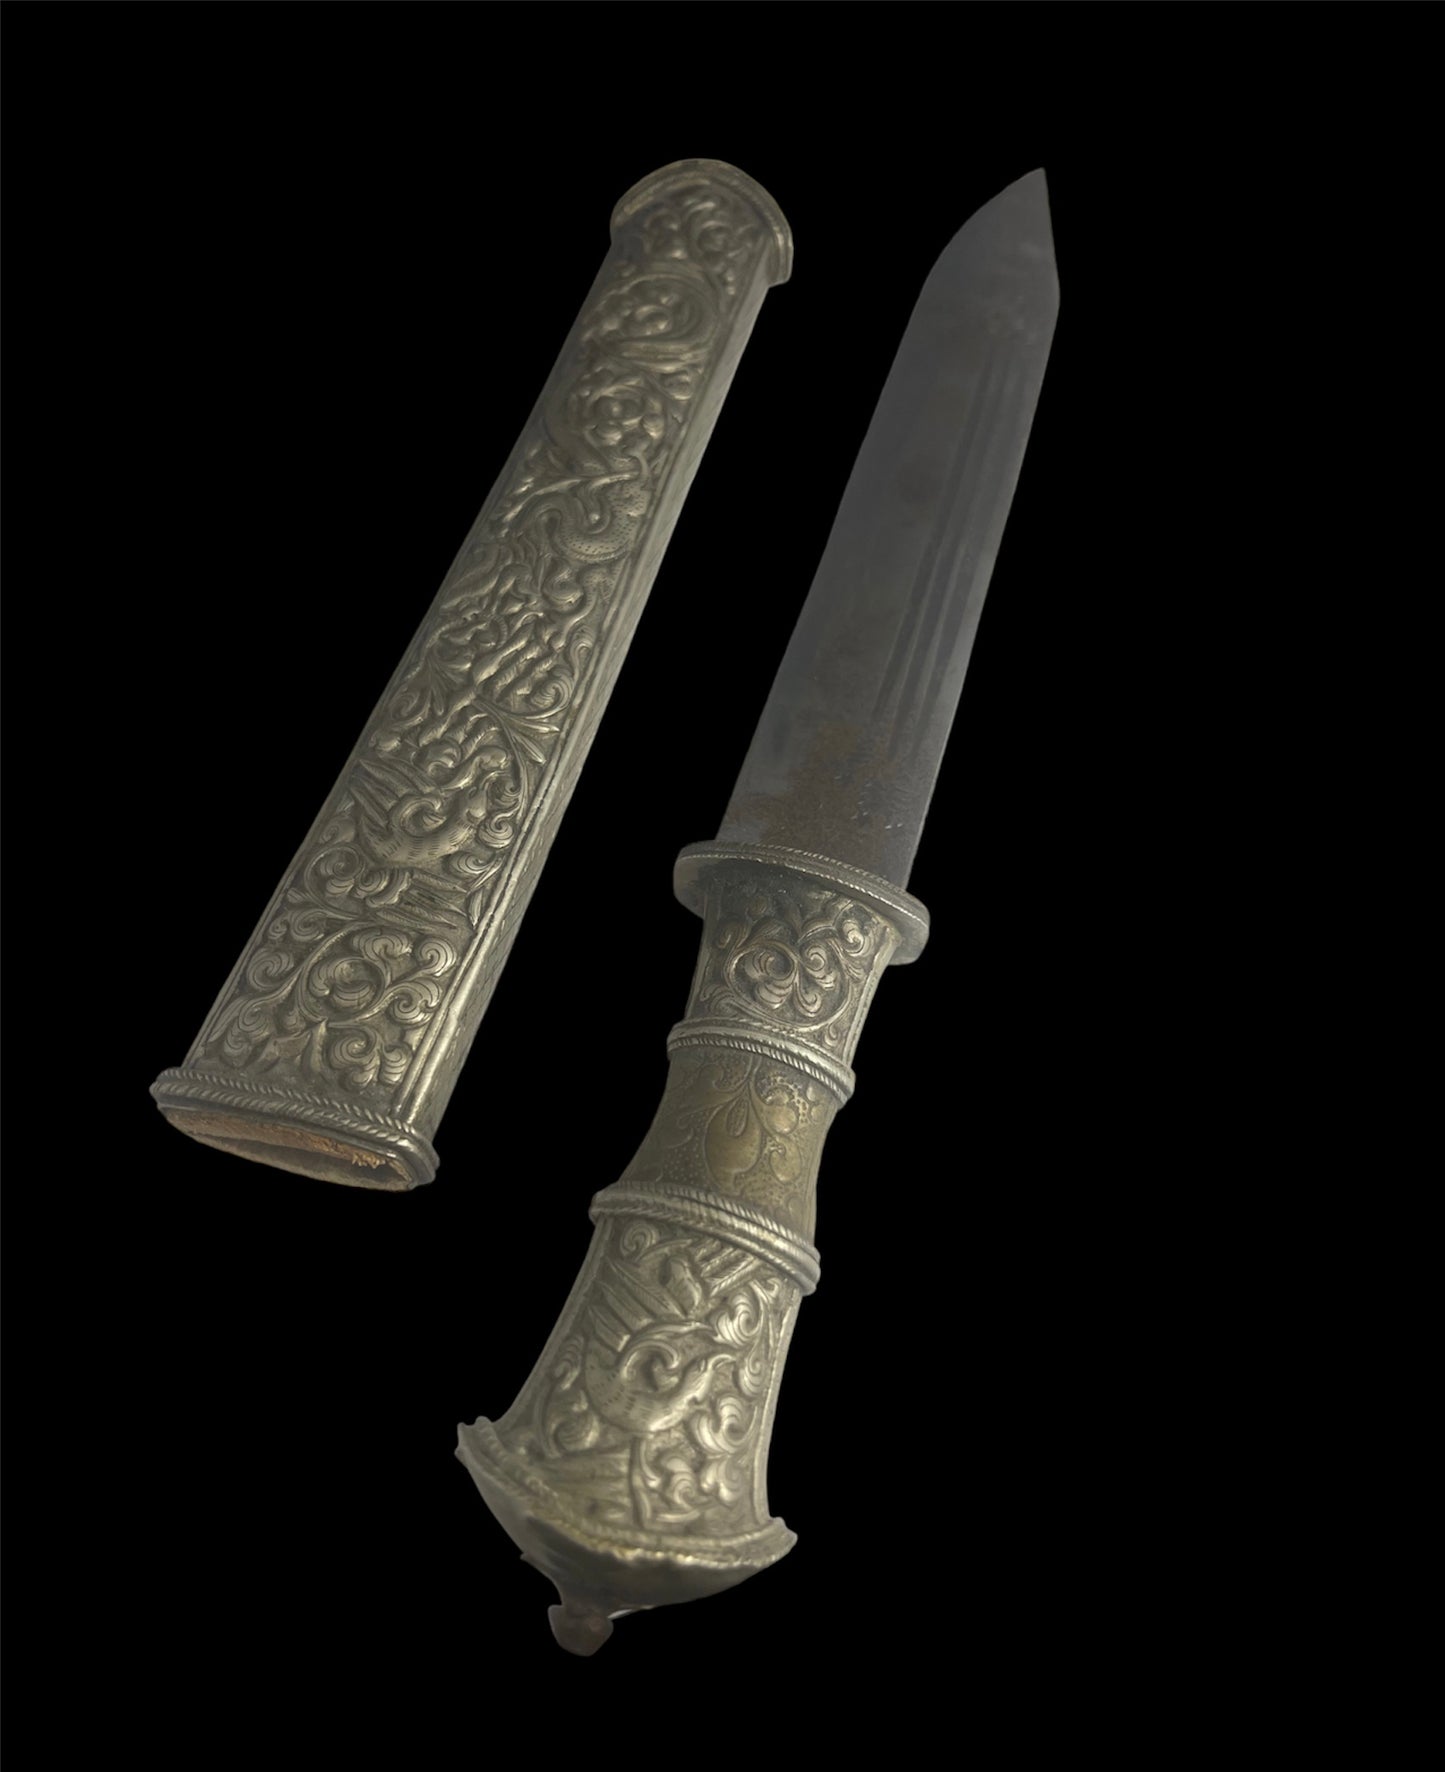 An antique Tibetan dagger with a carved sheath